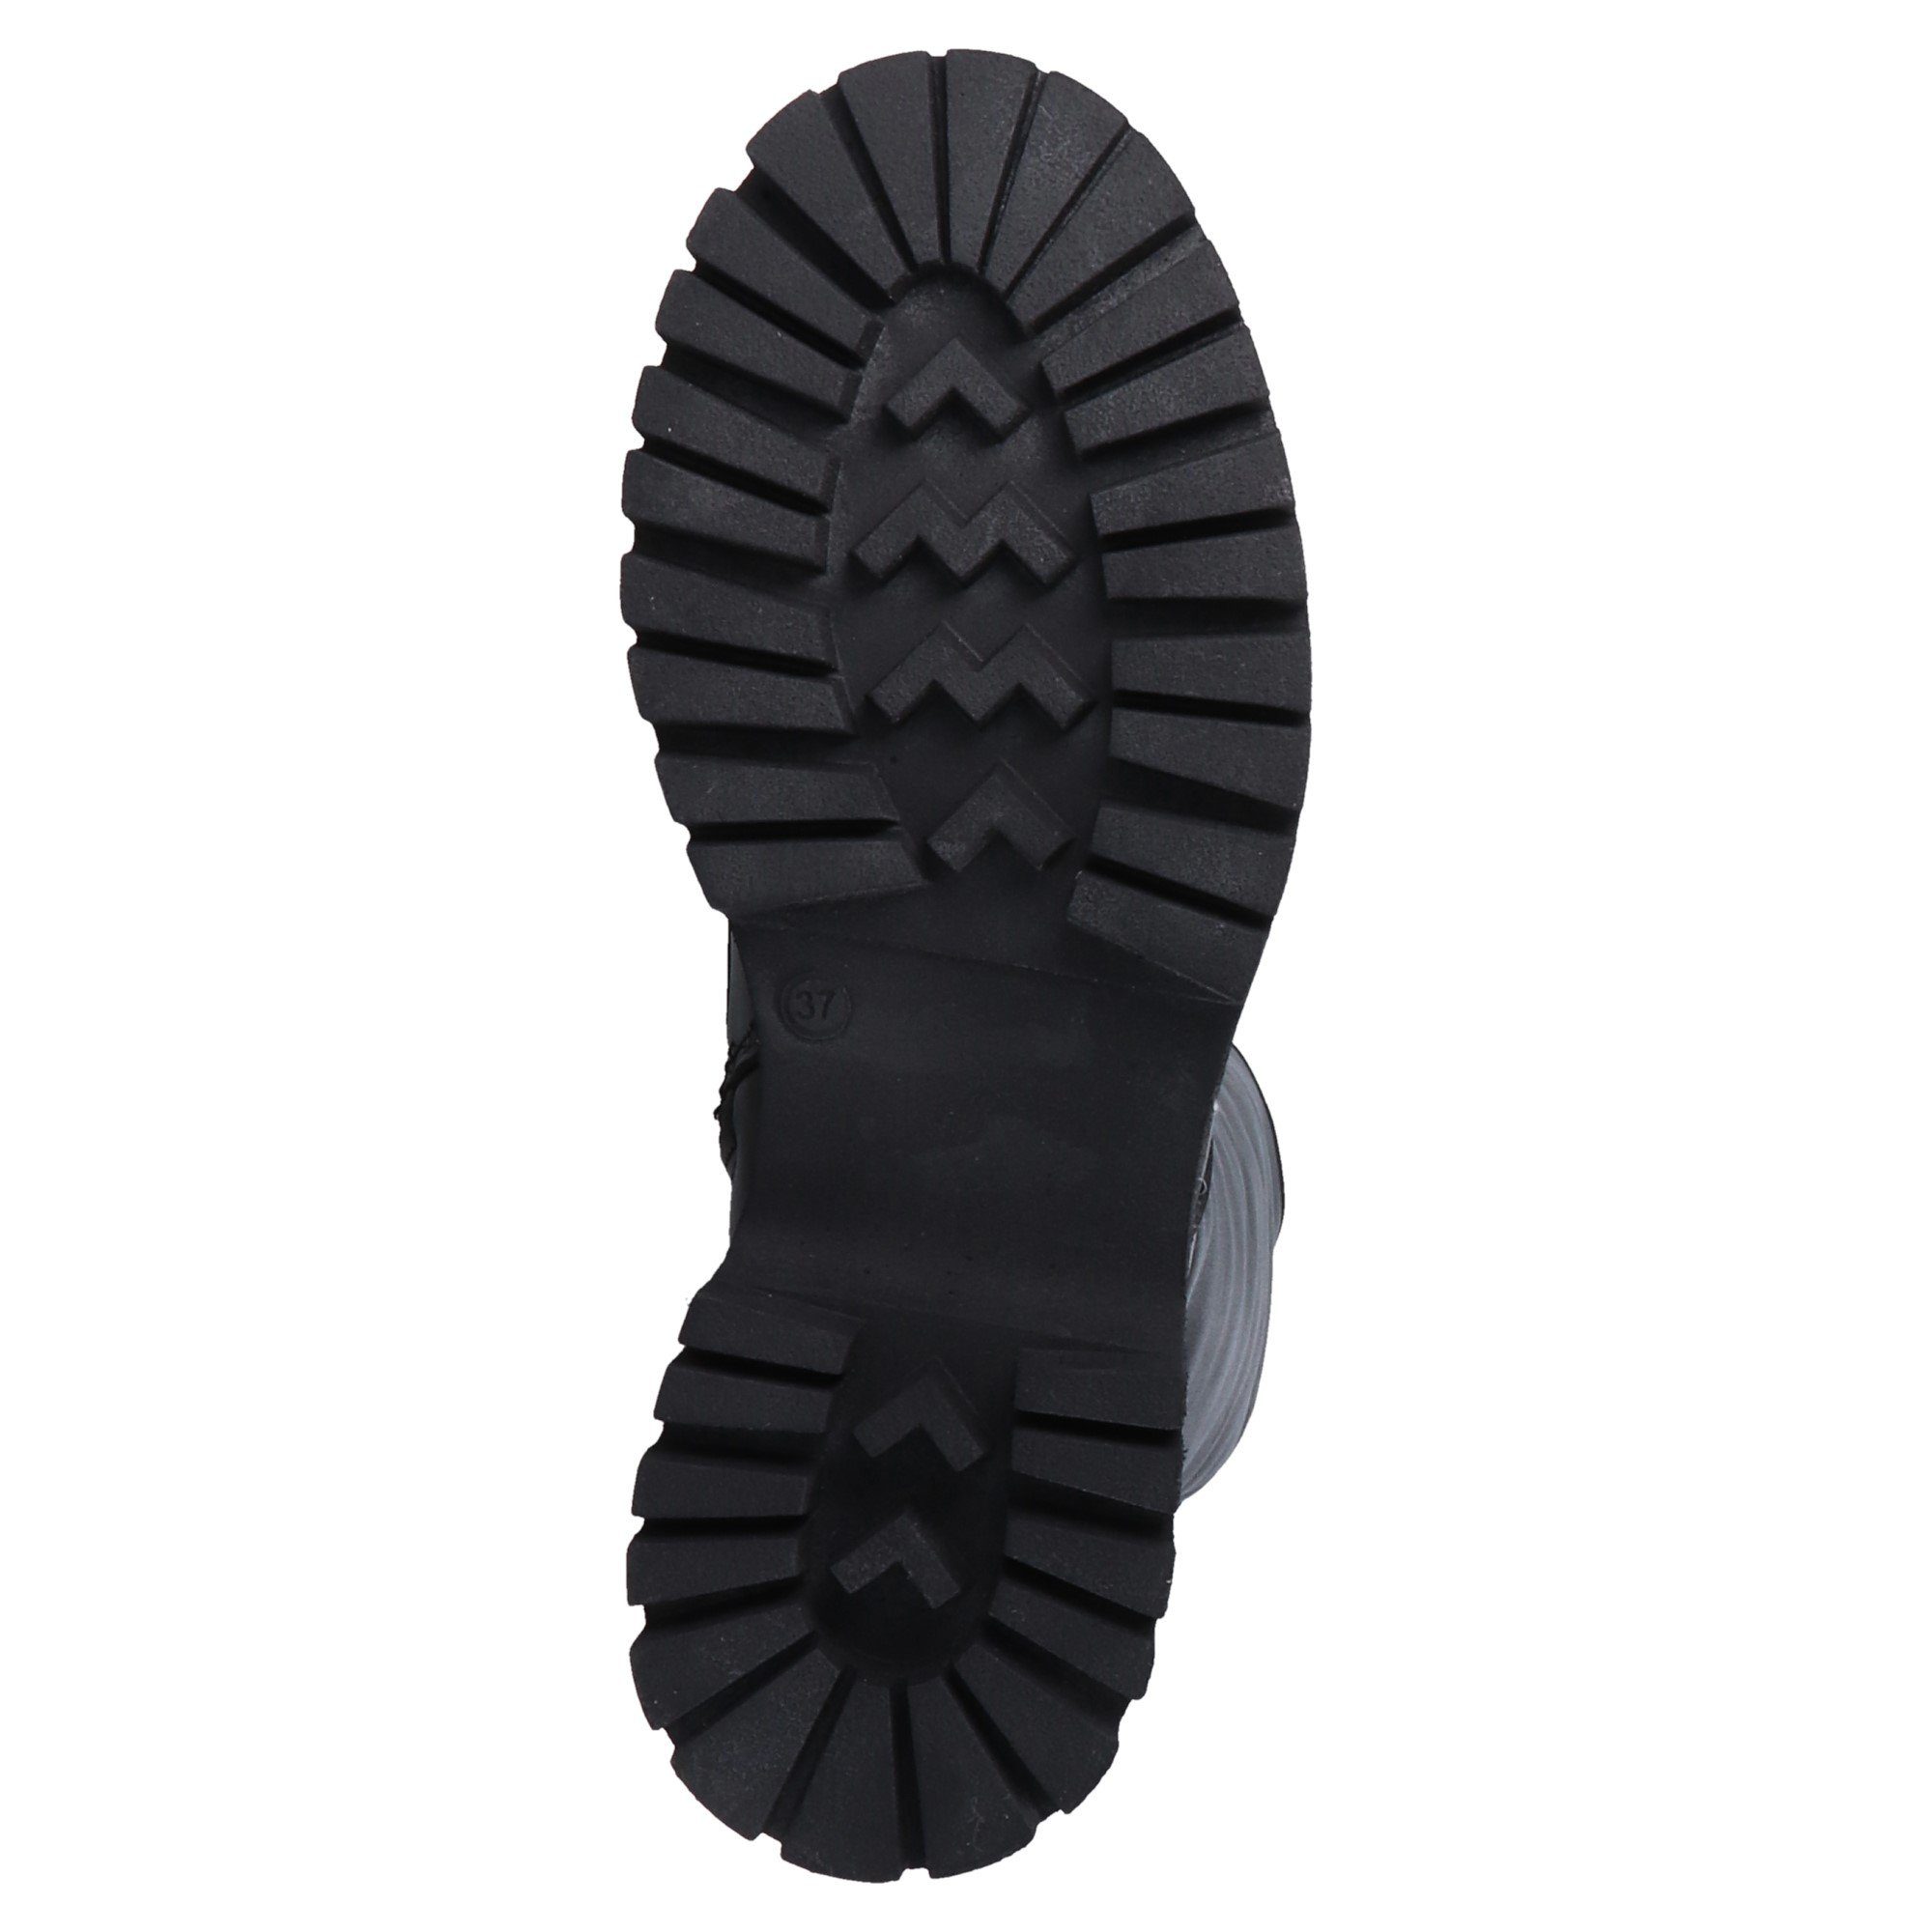 Black 3054 HANNA Leather Stiefel ONEPAIR